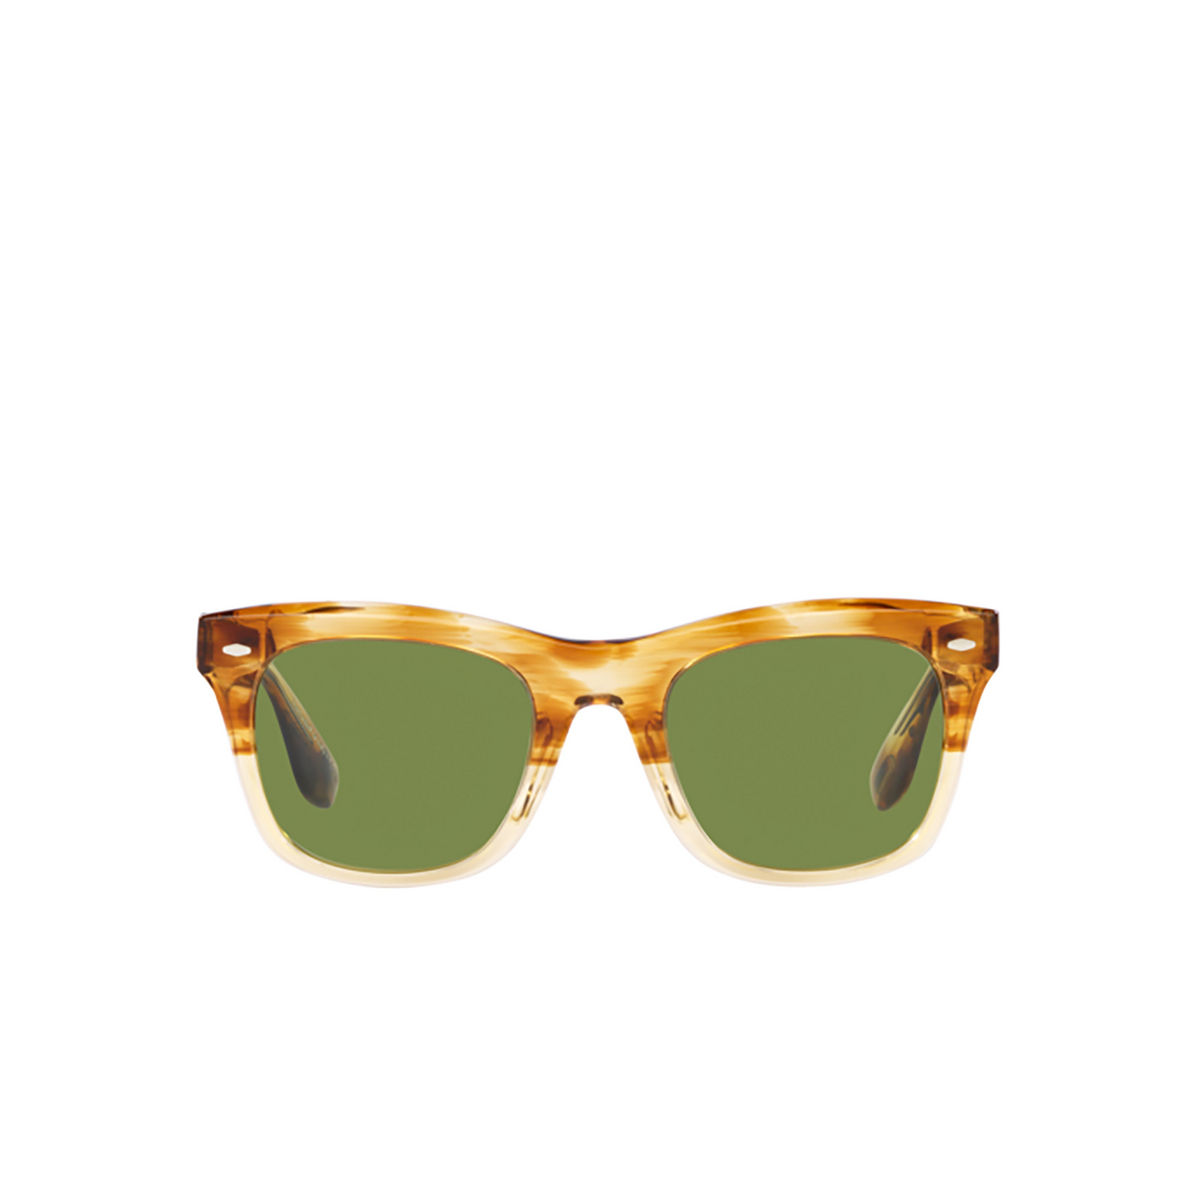 Oliver Peoples MR. BRUNELLO Sunglasses 167452 Honey vsb - front view